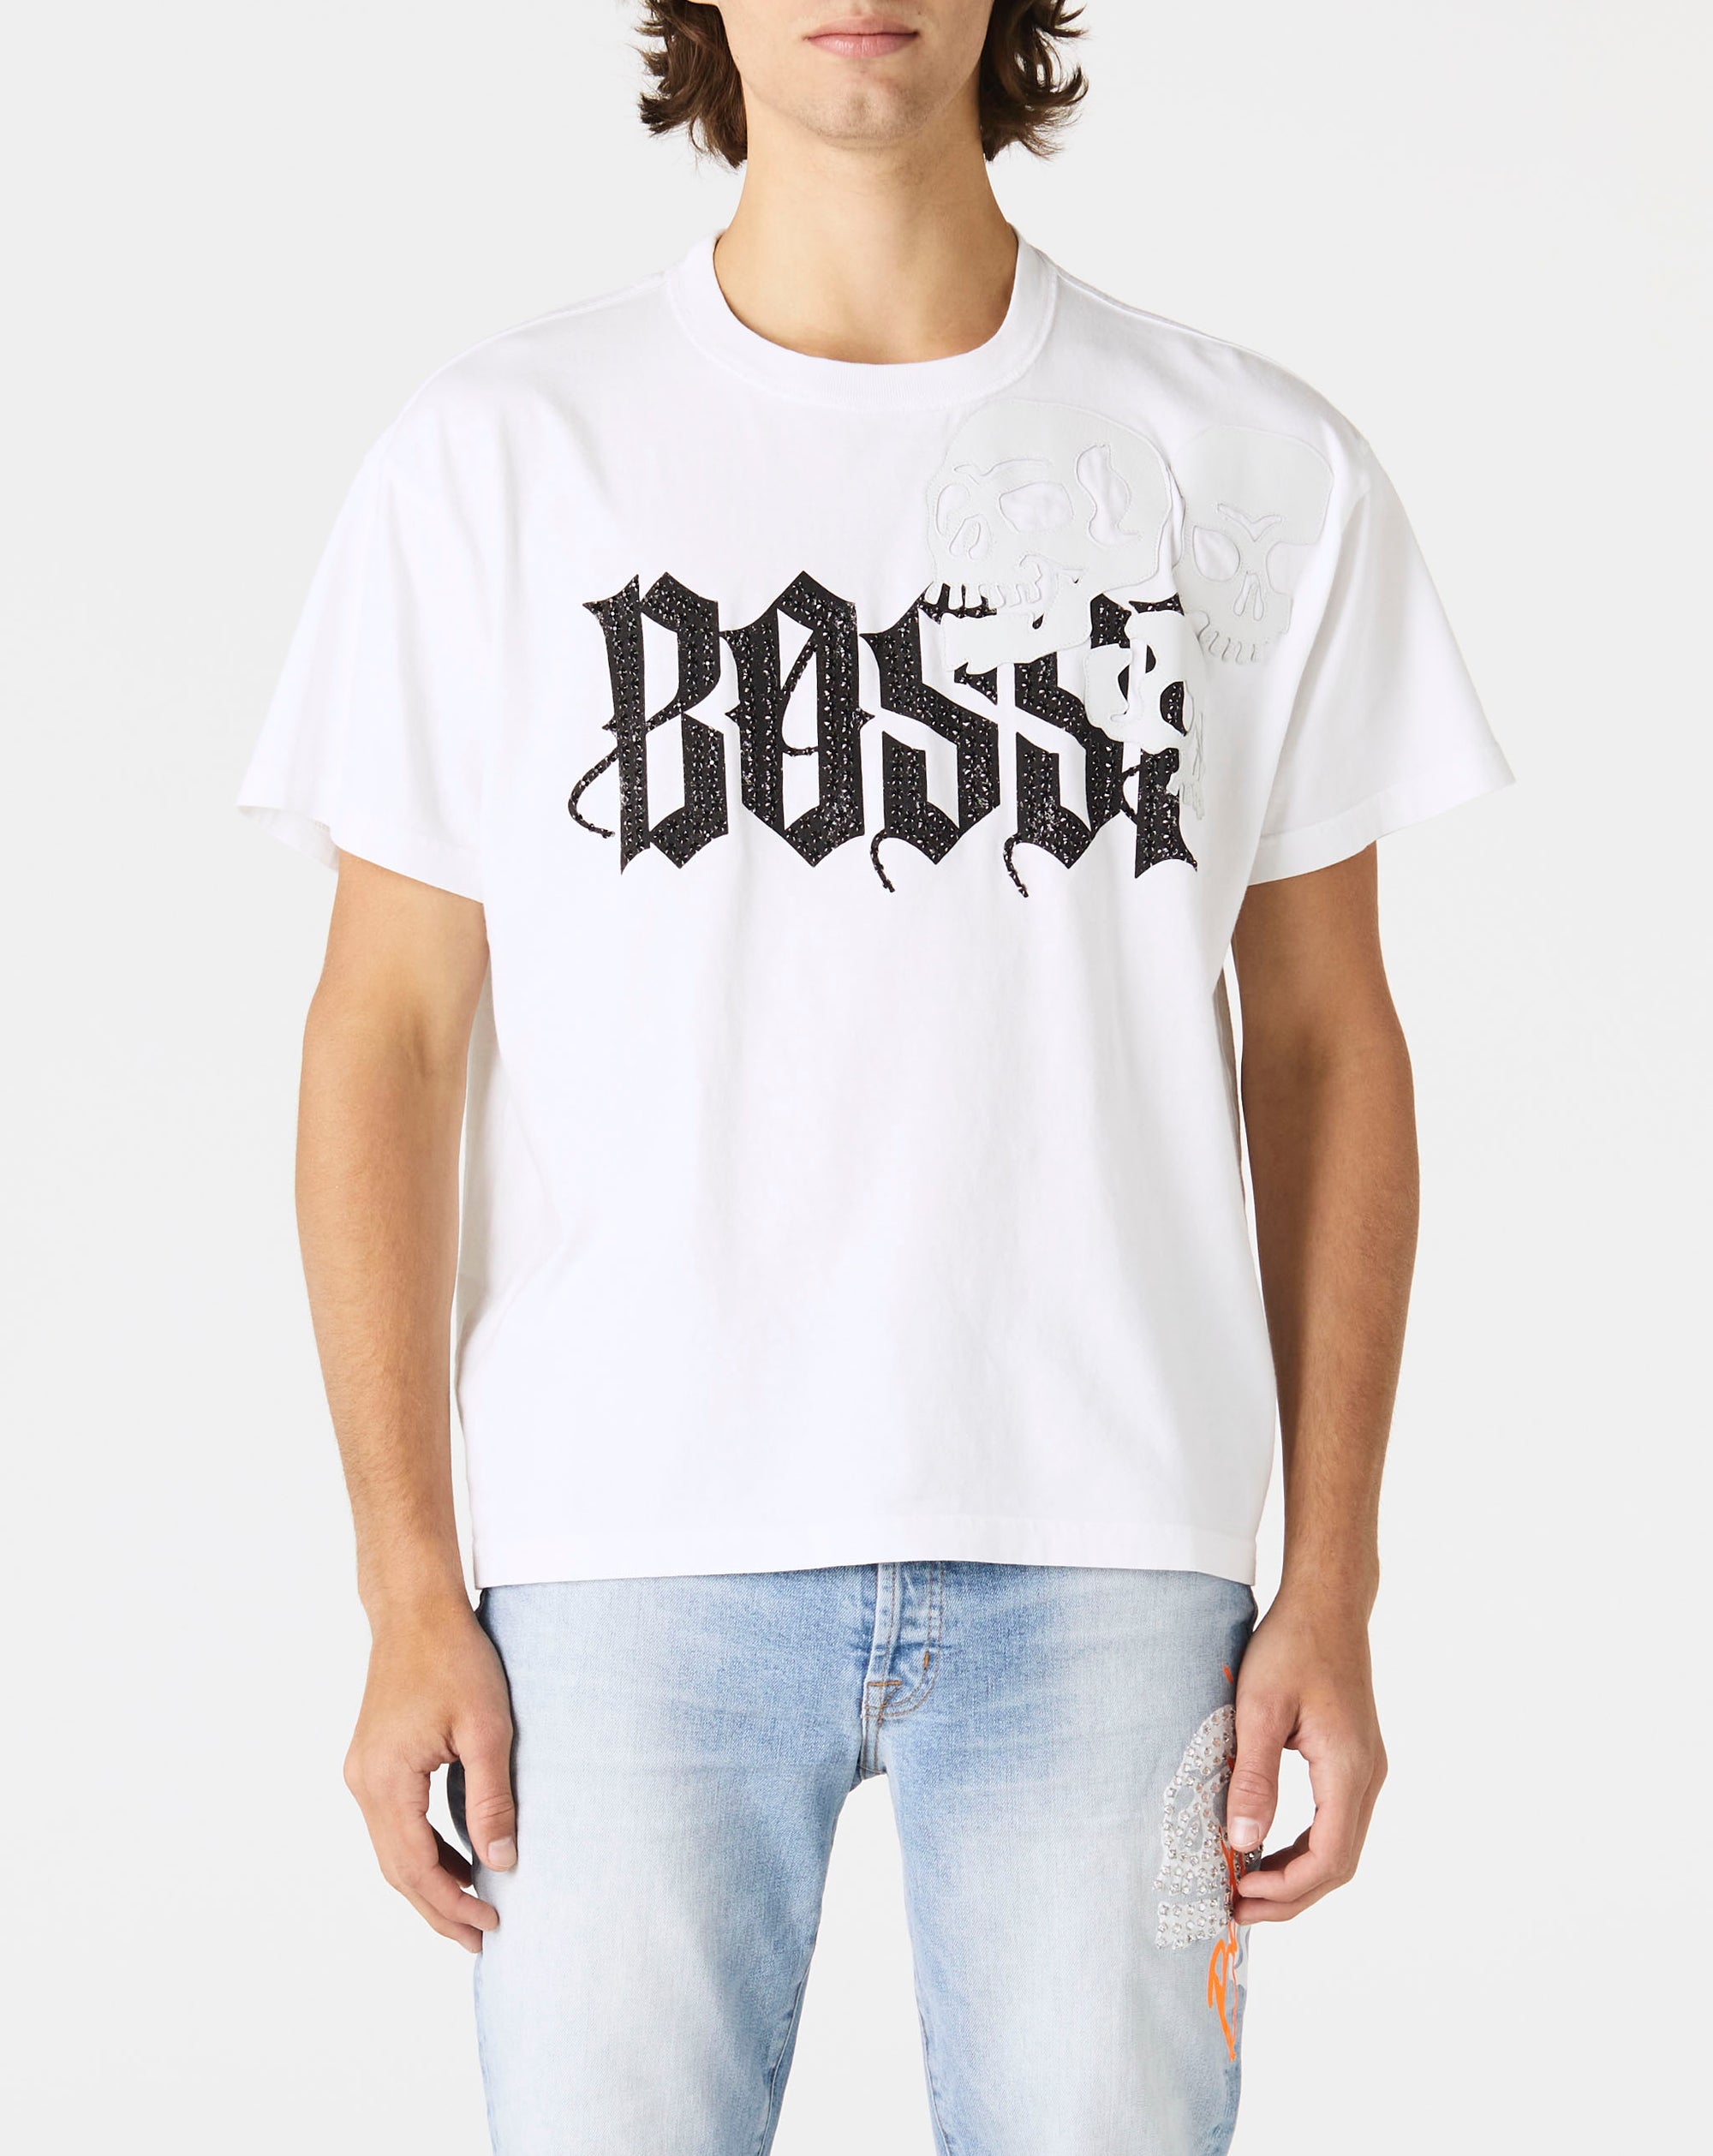 Bossi Applique Skull T-Shirt - Rule of Next Apparel